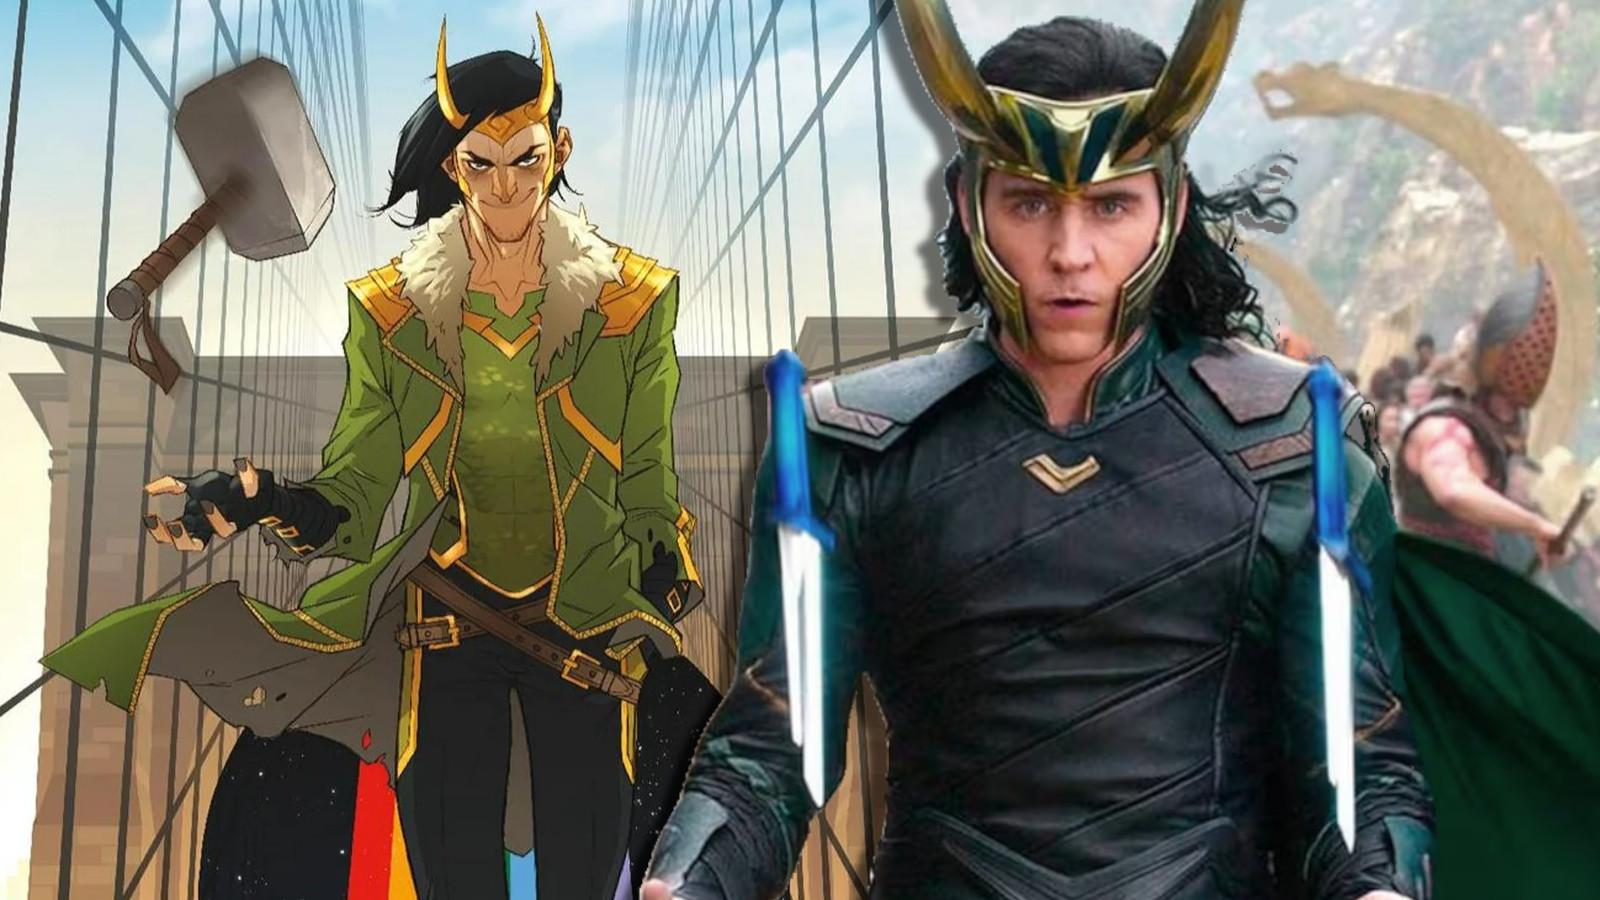 Netflix drama Ragnarok, about Thor and Loki reincarnated, is